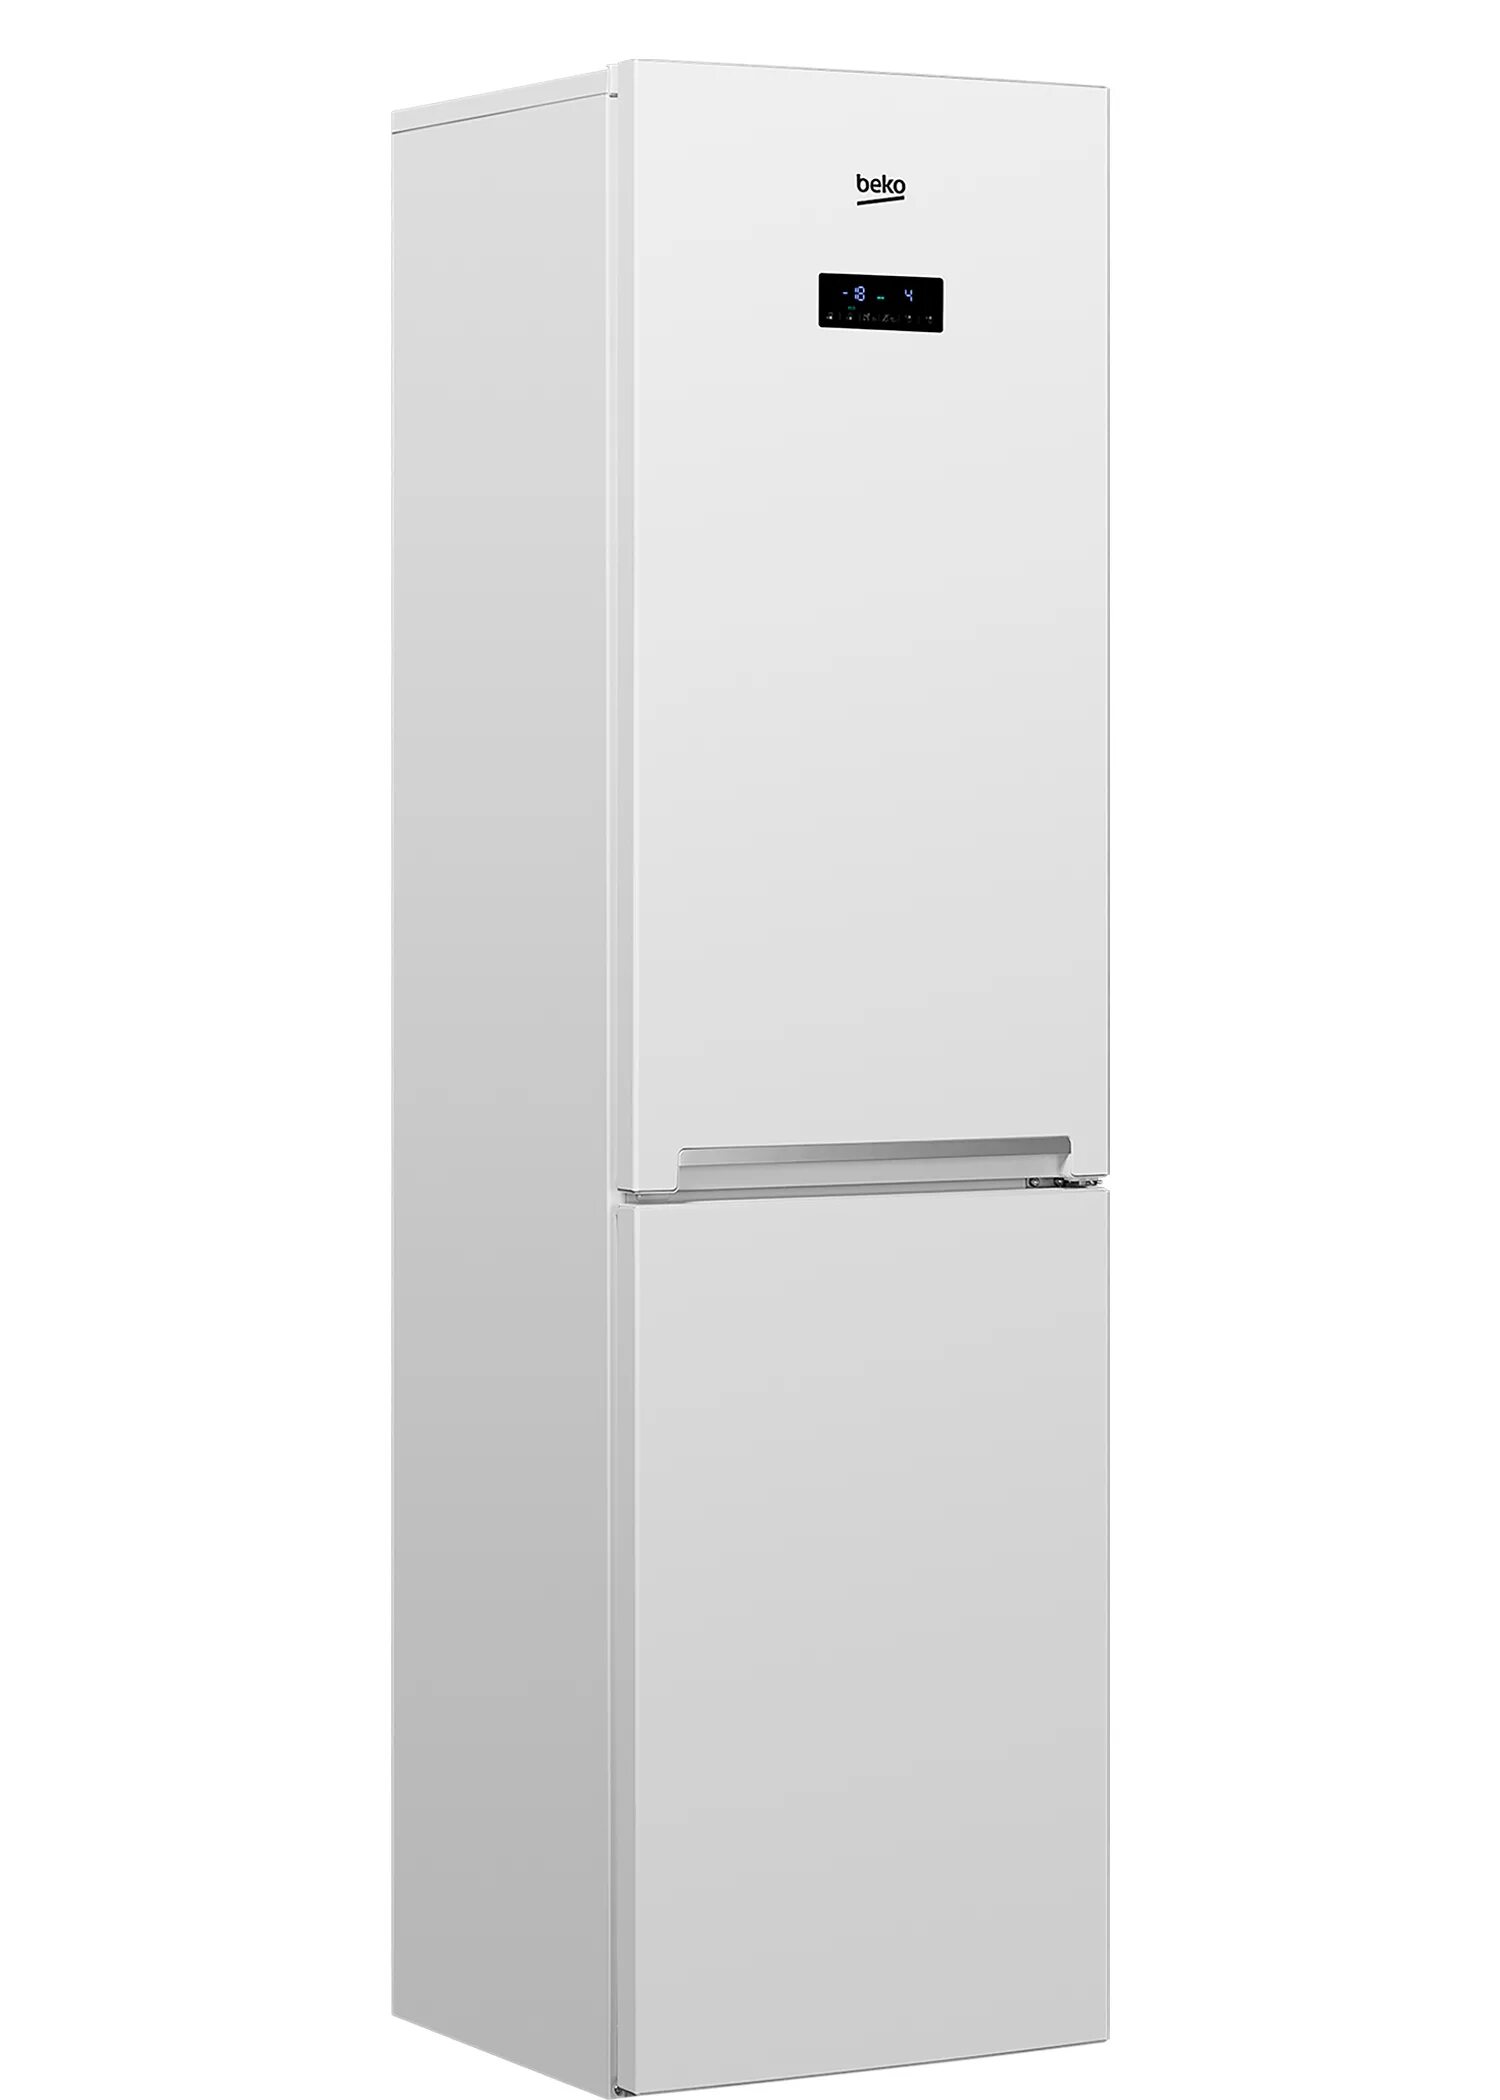 Beko rcnk335e20vw. Холодильник БЕКО rcnk335e20vw. 335 Е холодильник БЕКО. Холодильник морозильник индезит